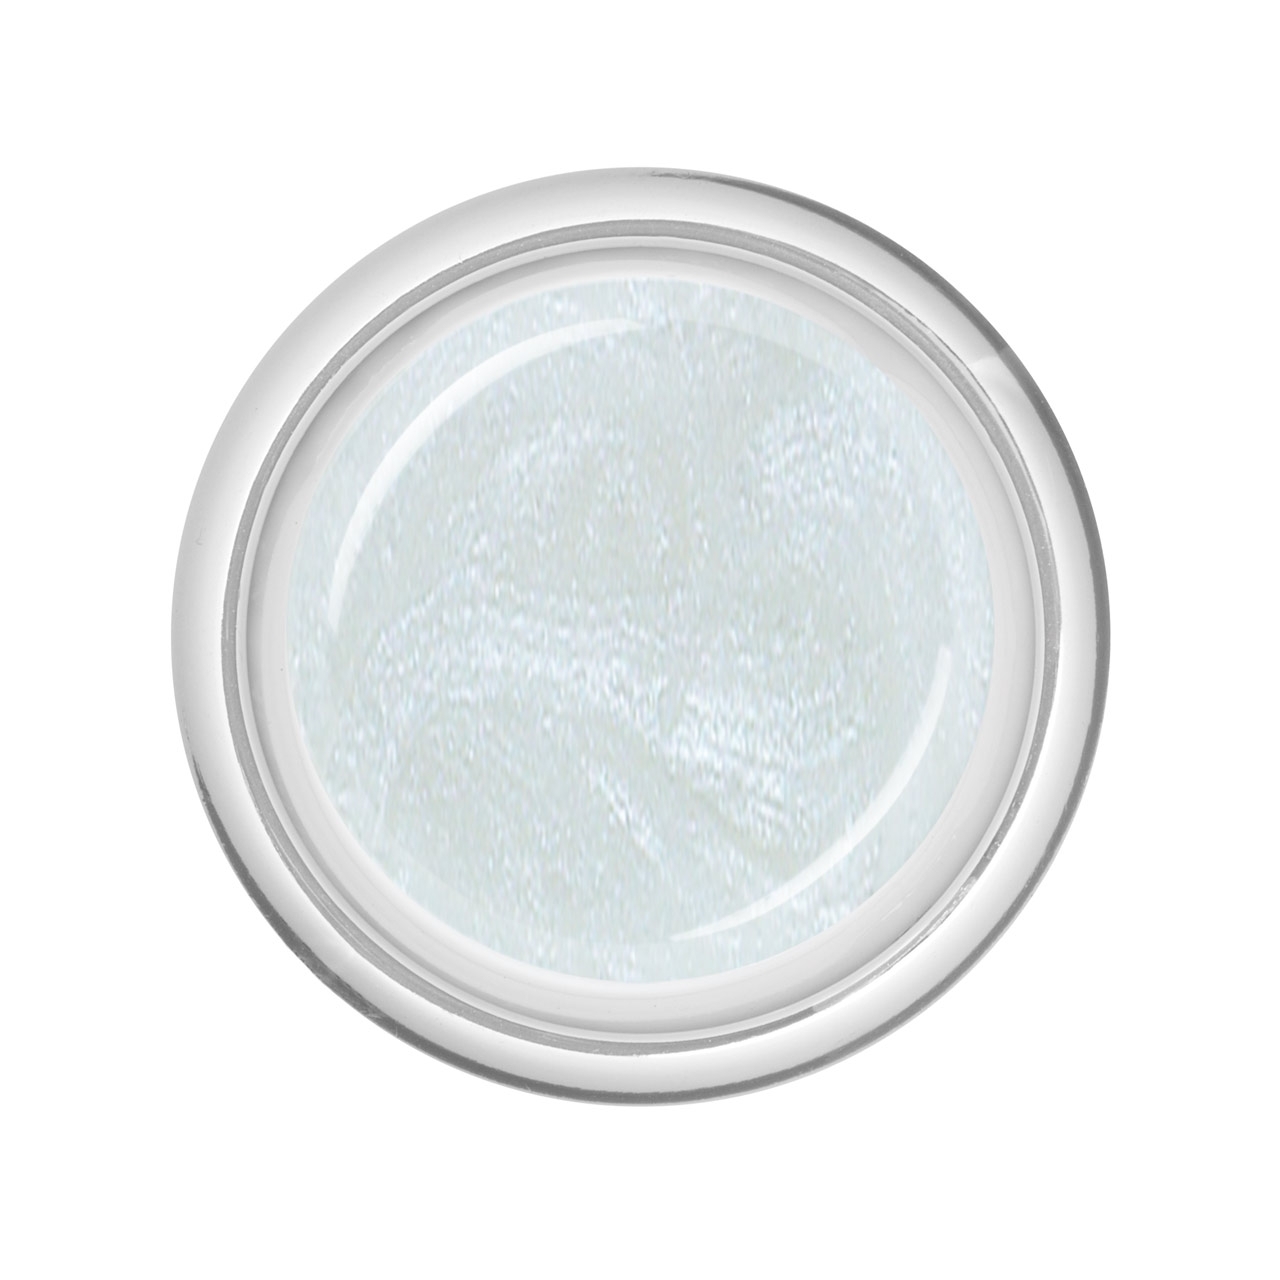 BAEHR BEAUTY CONCEPT - NAILS Colour-Gel Metallic White 5 ml